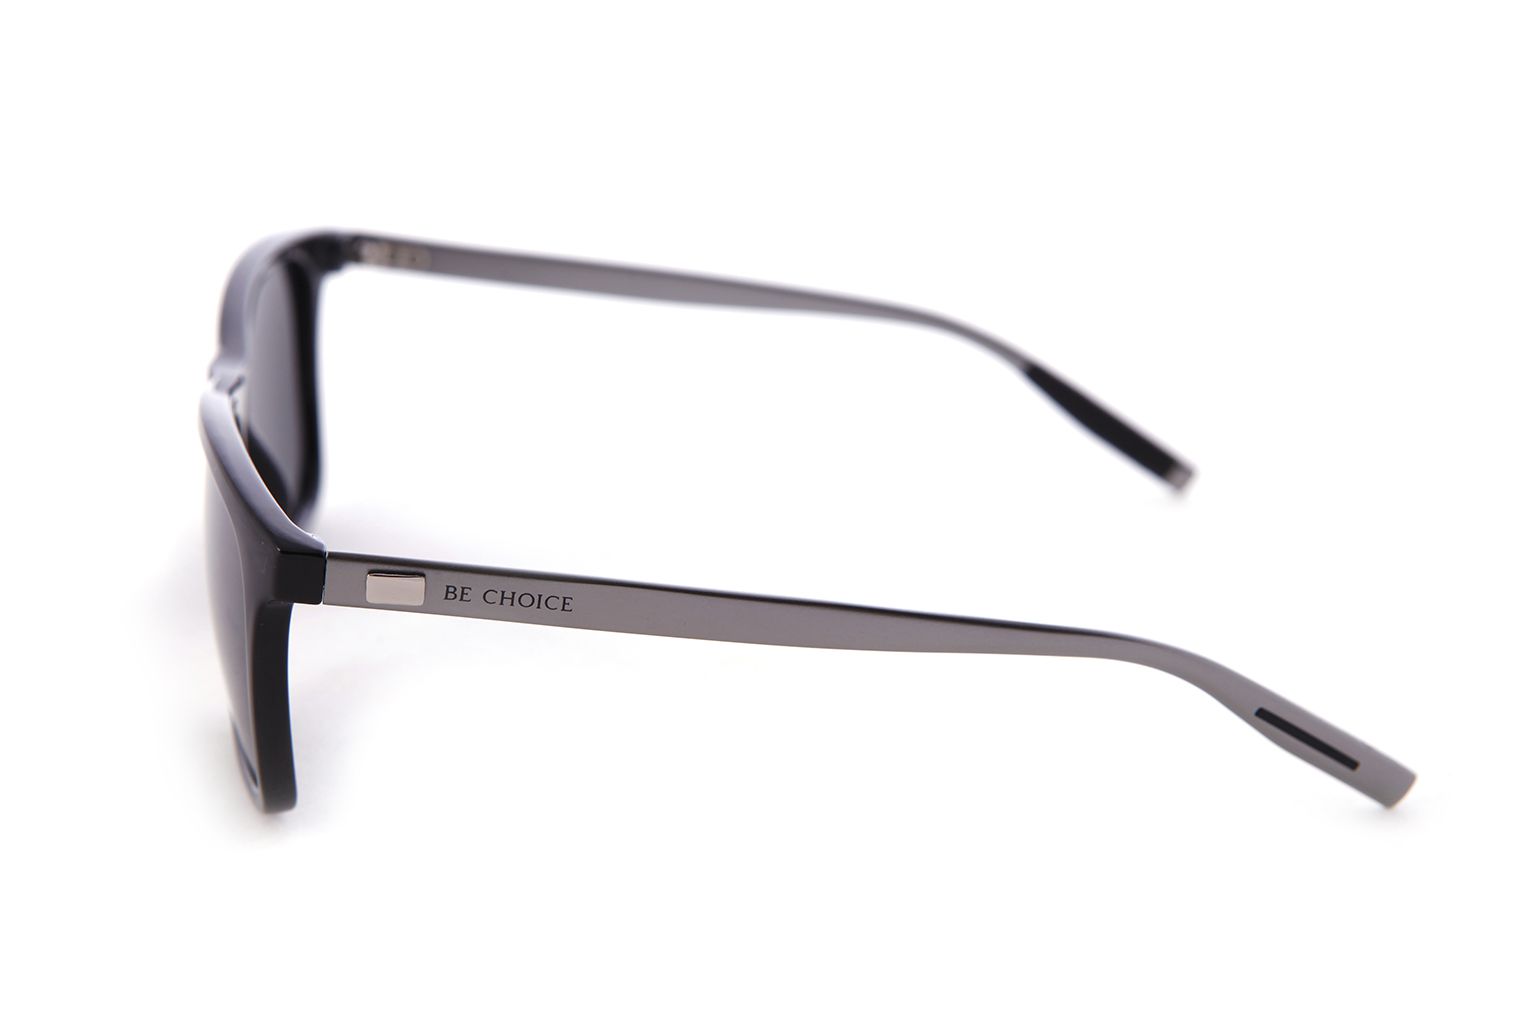 Óculos BE CHOICE Masculino Clássico Preto com Cinza Polarizado